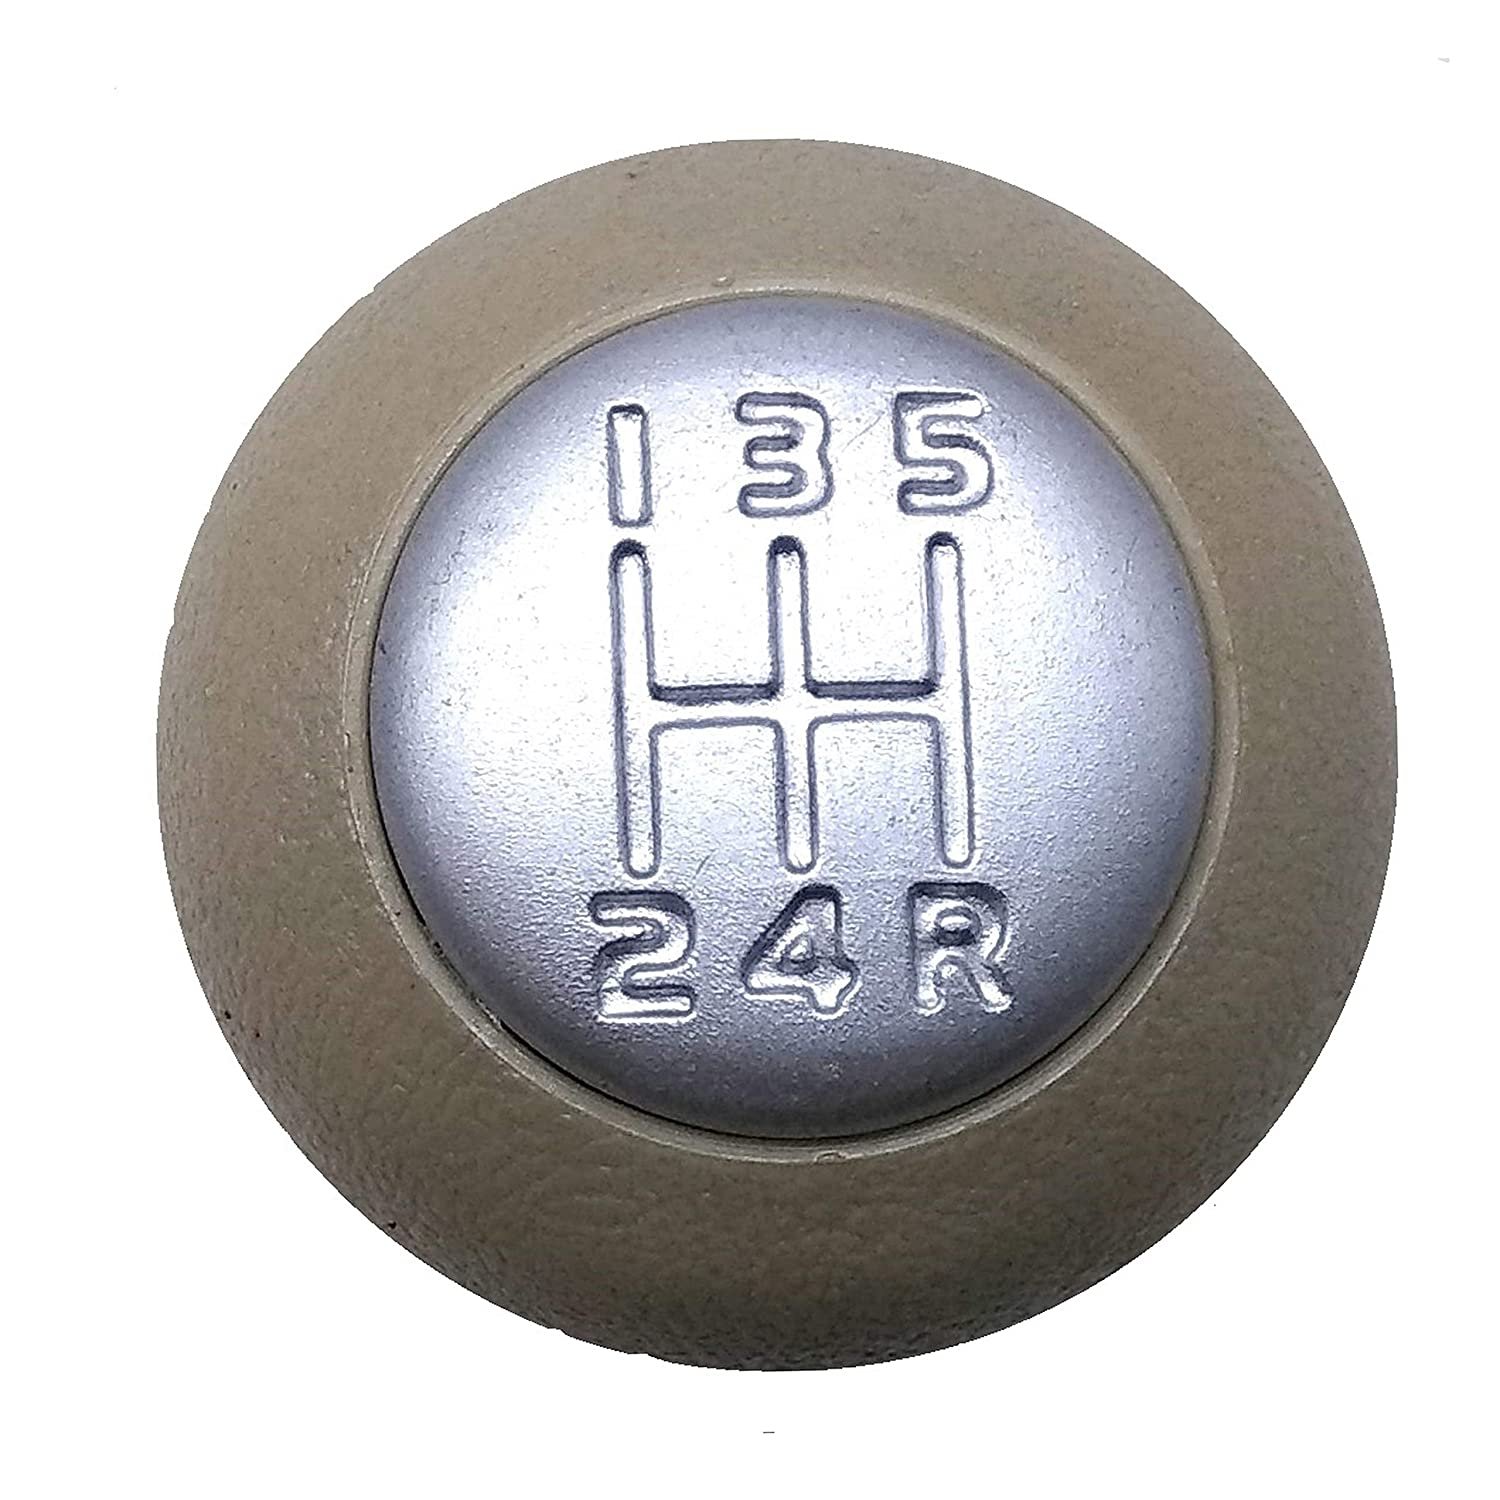 Car Gear Knob For Manual Transmission (Beige) Image 